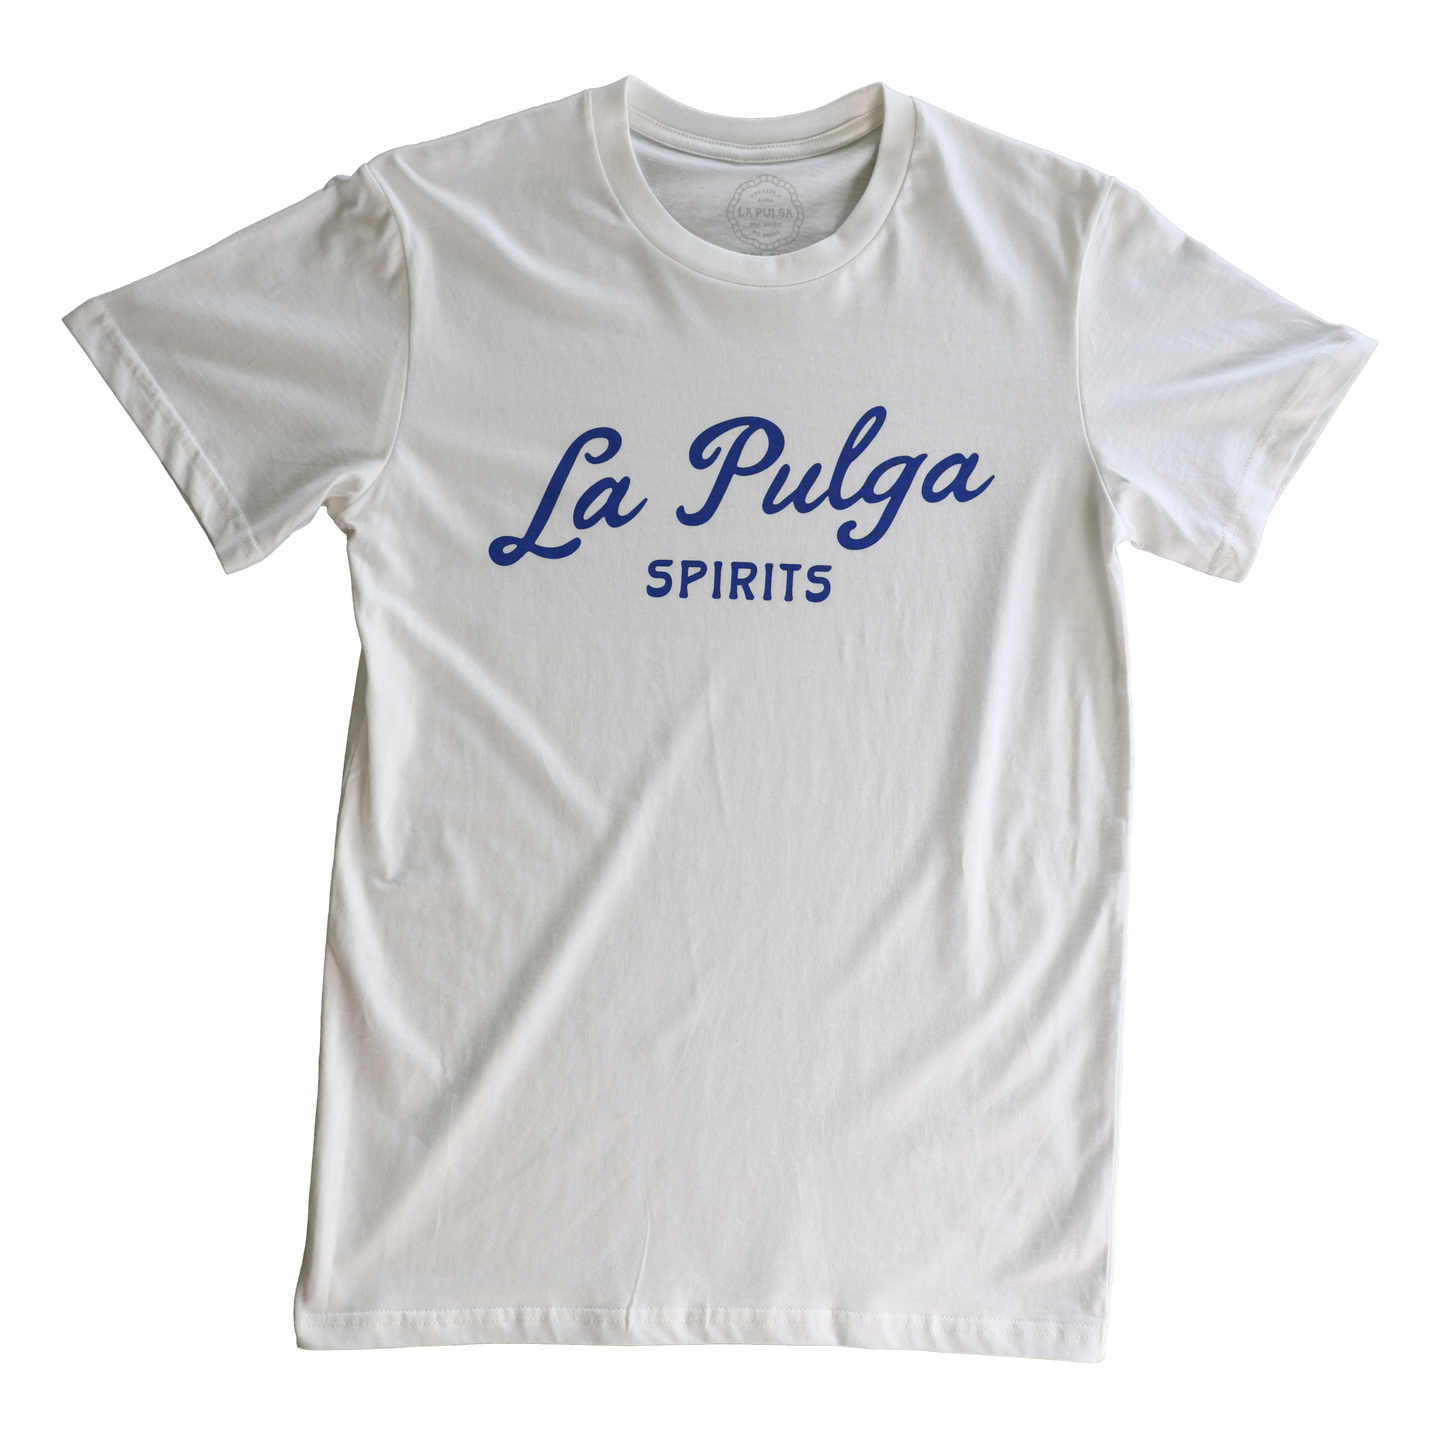 La Pulga Spirits Premium Short Sleeve T-Shirt - White